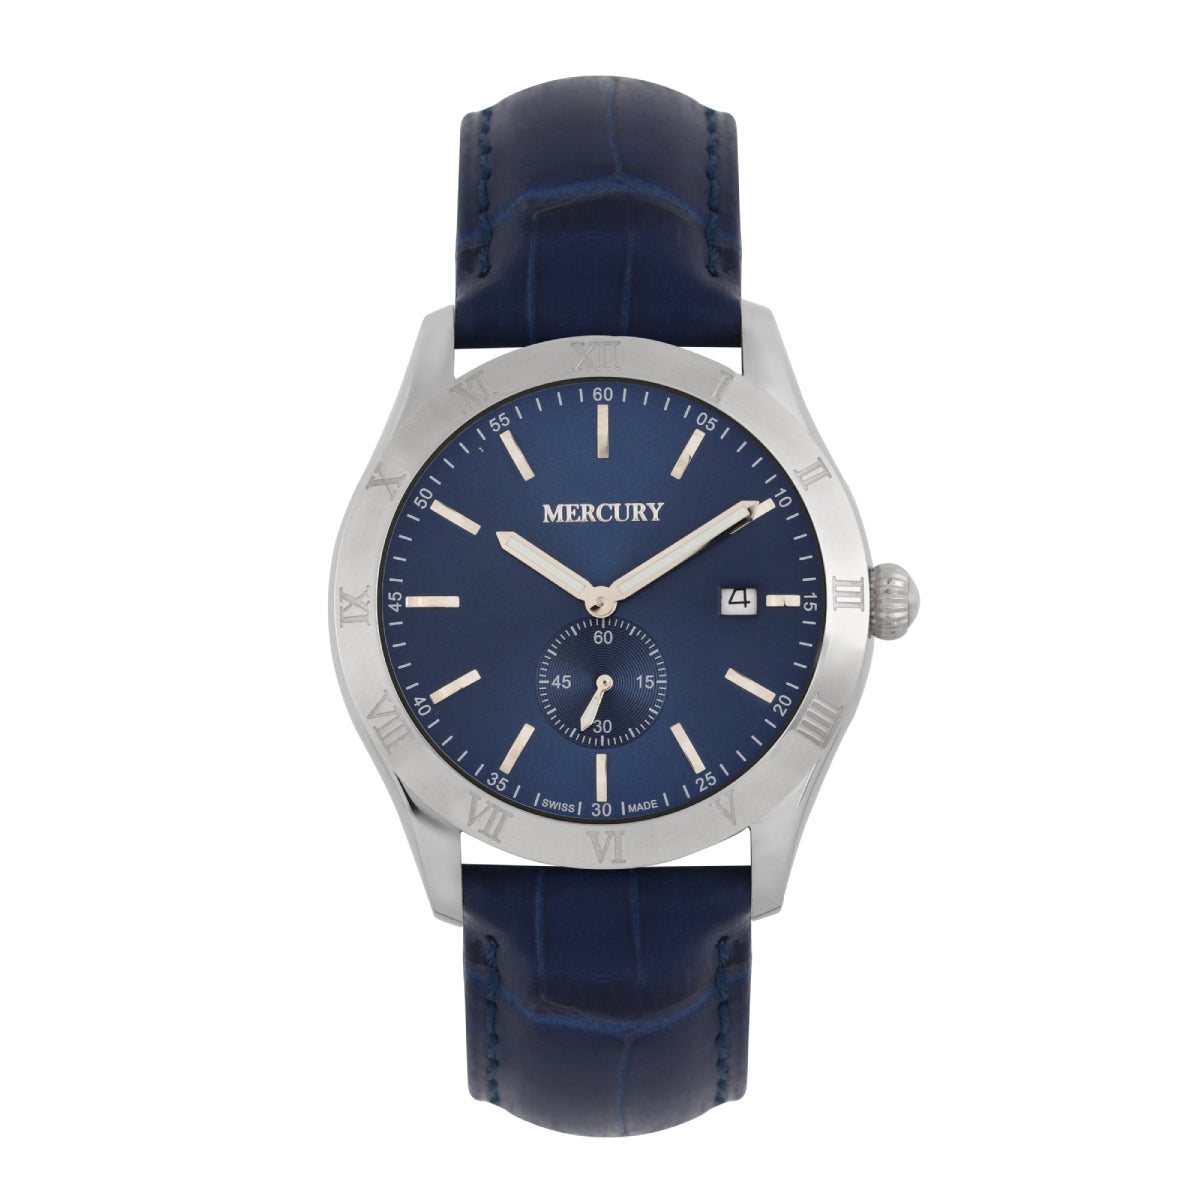 Mercury Men's Swiss Quartz Watch with Blue Dial - MER-0051